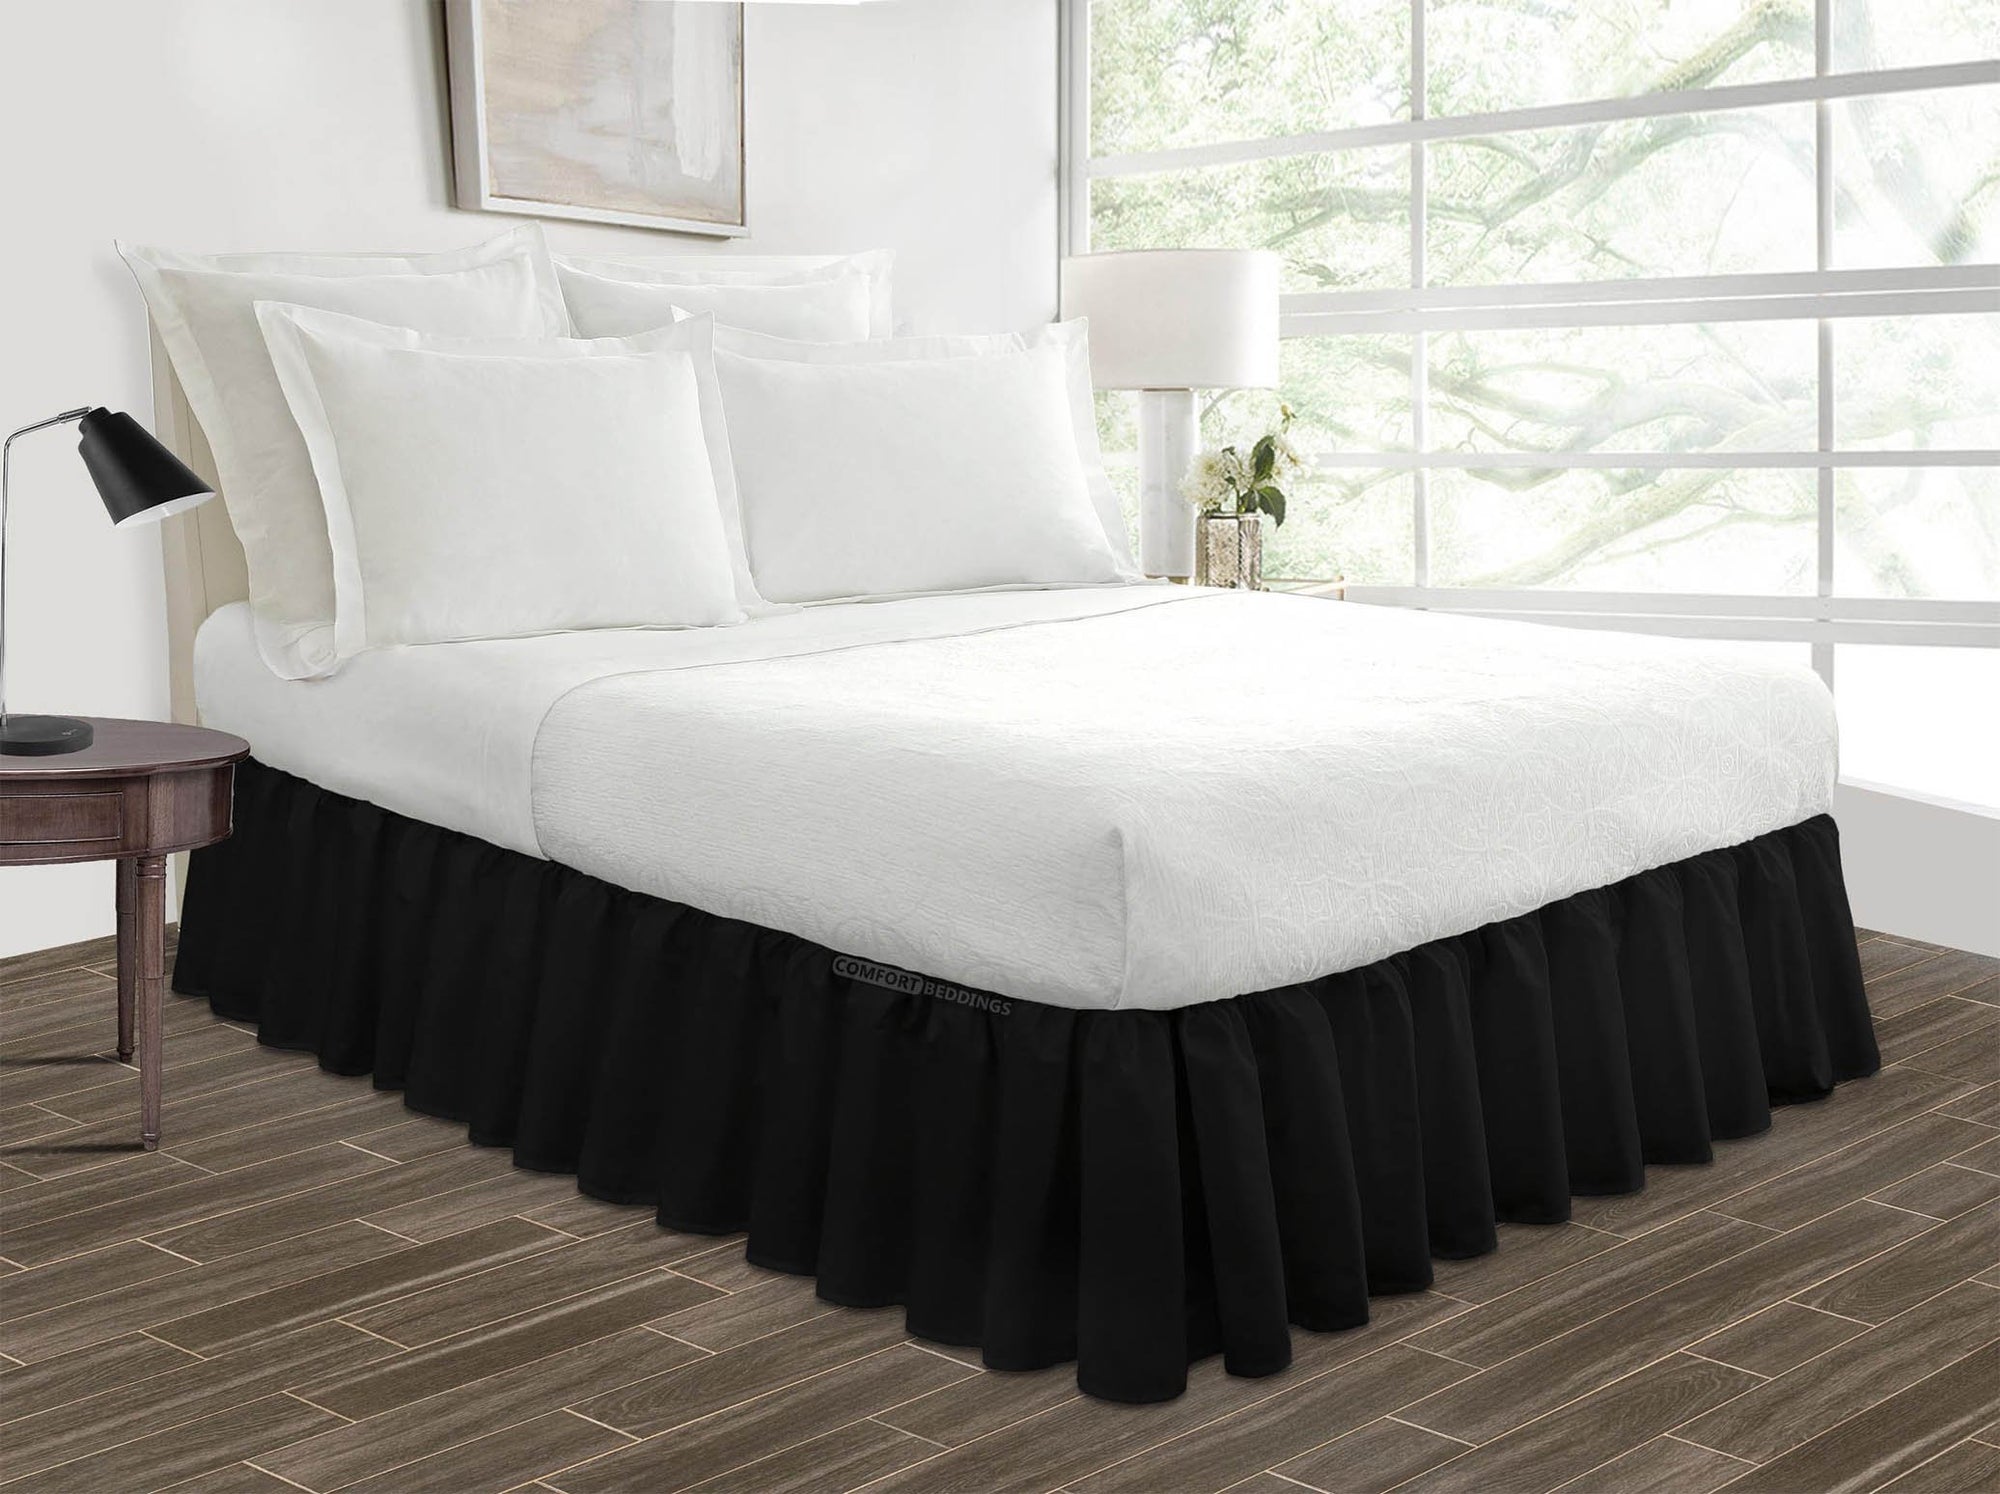 Luxury Black Ruffle Bed Skirt